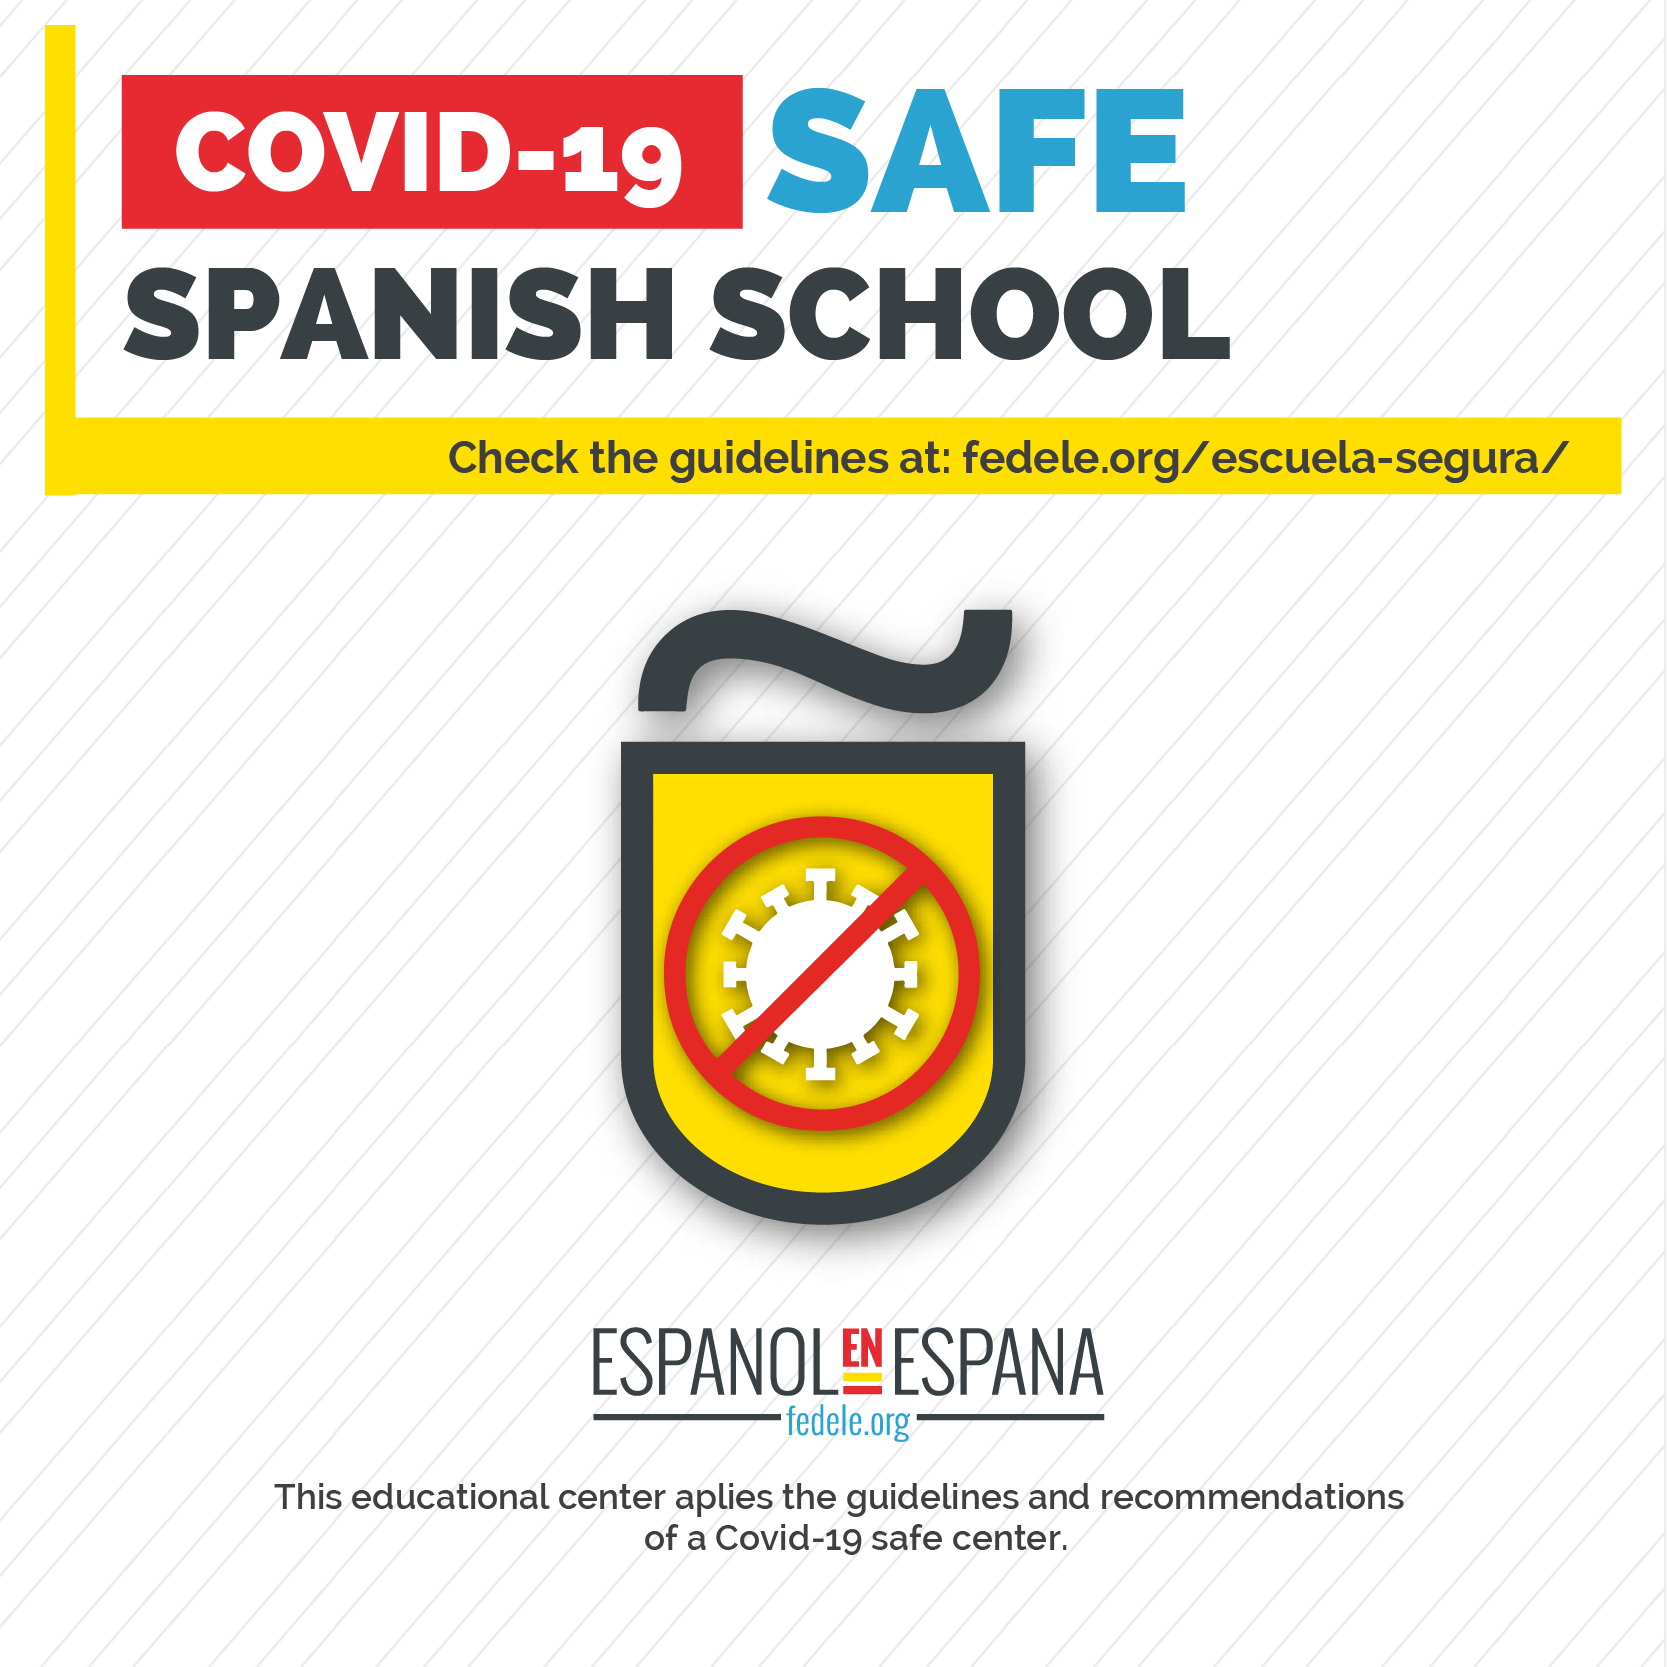 COVID-19 SAFE SPANISH SCHOOL GRANADA, SPAIN